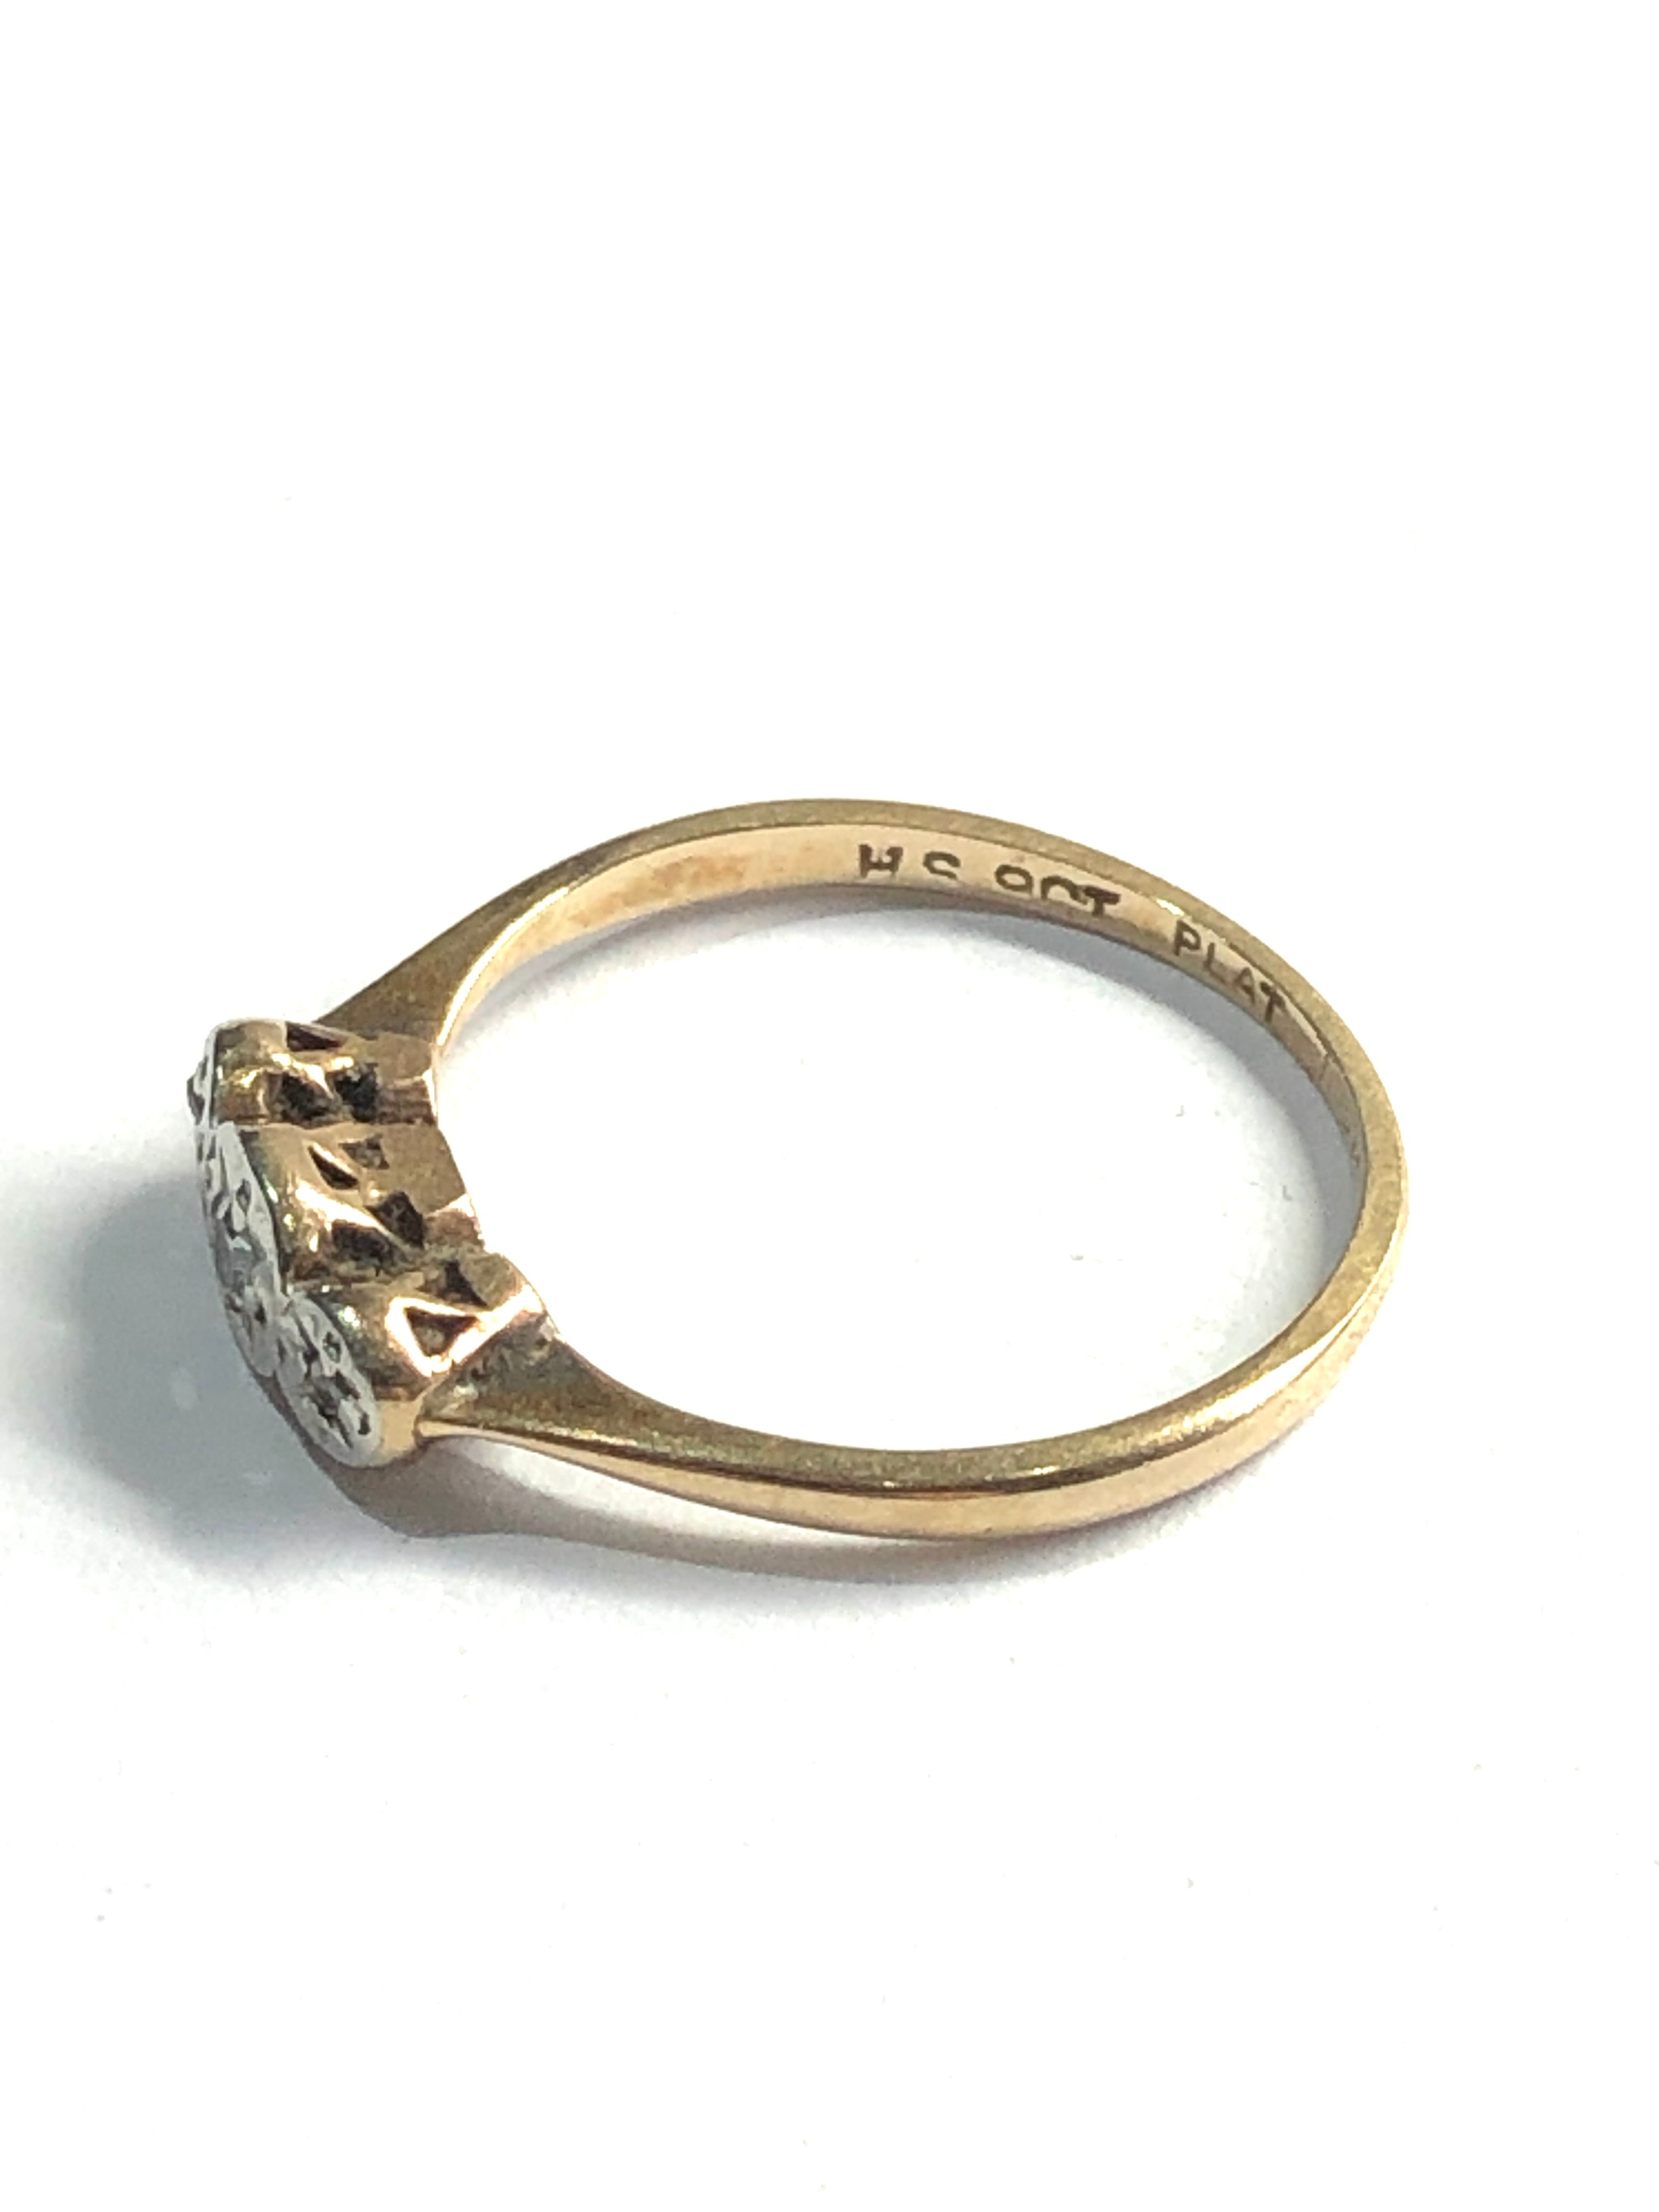 9ct gold diamond ring weight 1.3g - Image 2 of 3